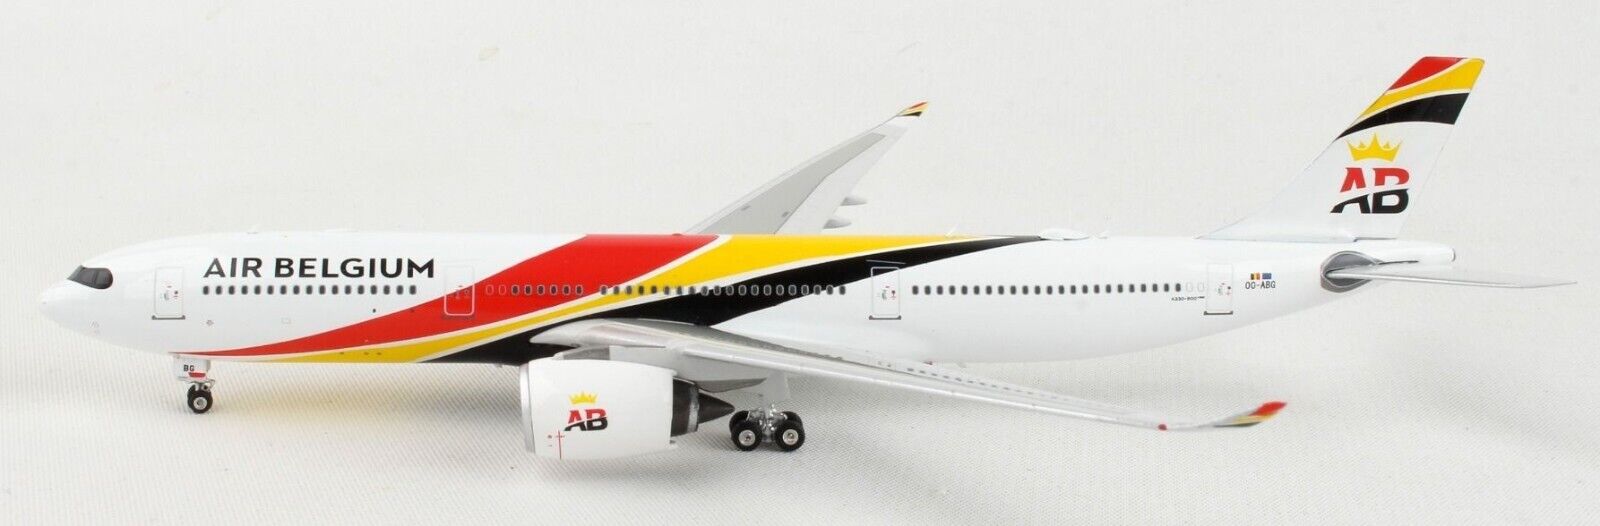 Phoenix 11724 Air Belgium Airbus A330-900neo OO-ABG Diecast 1/400 Model Airplane